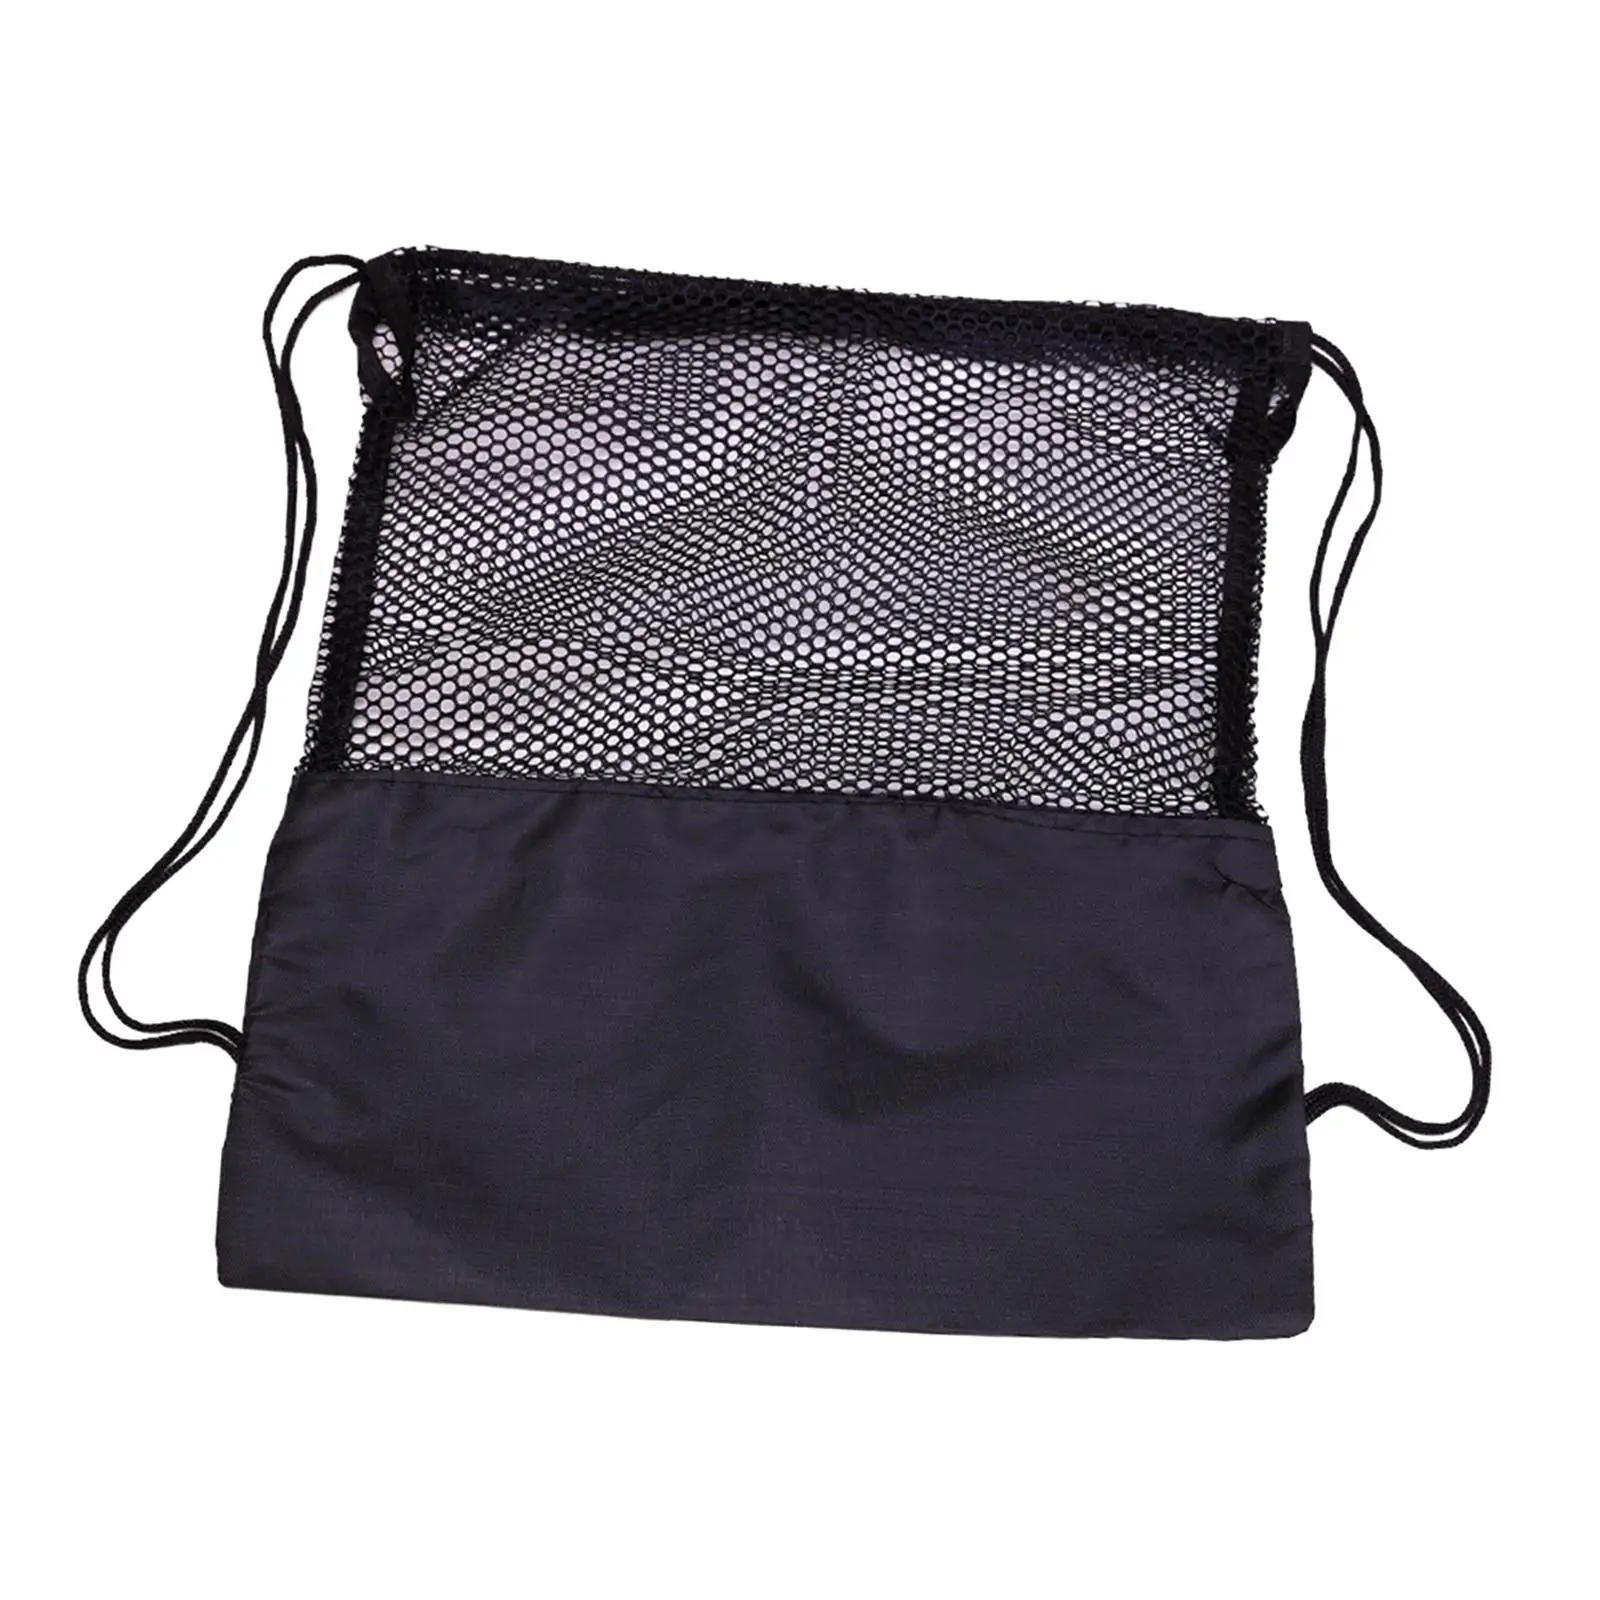 Basketball Mesh Bag Sackpack Ball Holder Drawstring Backpack Ball Storage Bag for Dance Volleyball Travel Football Marathons